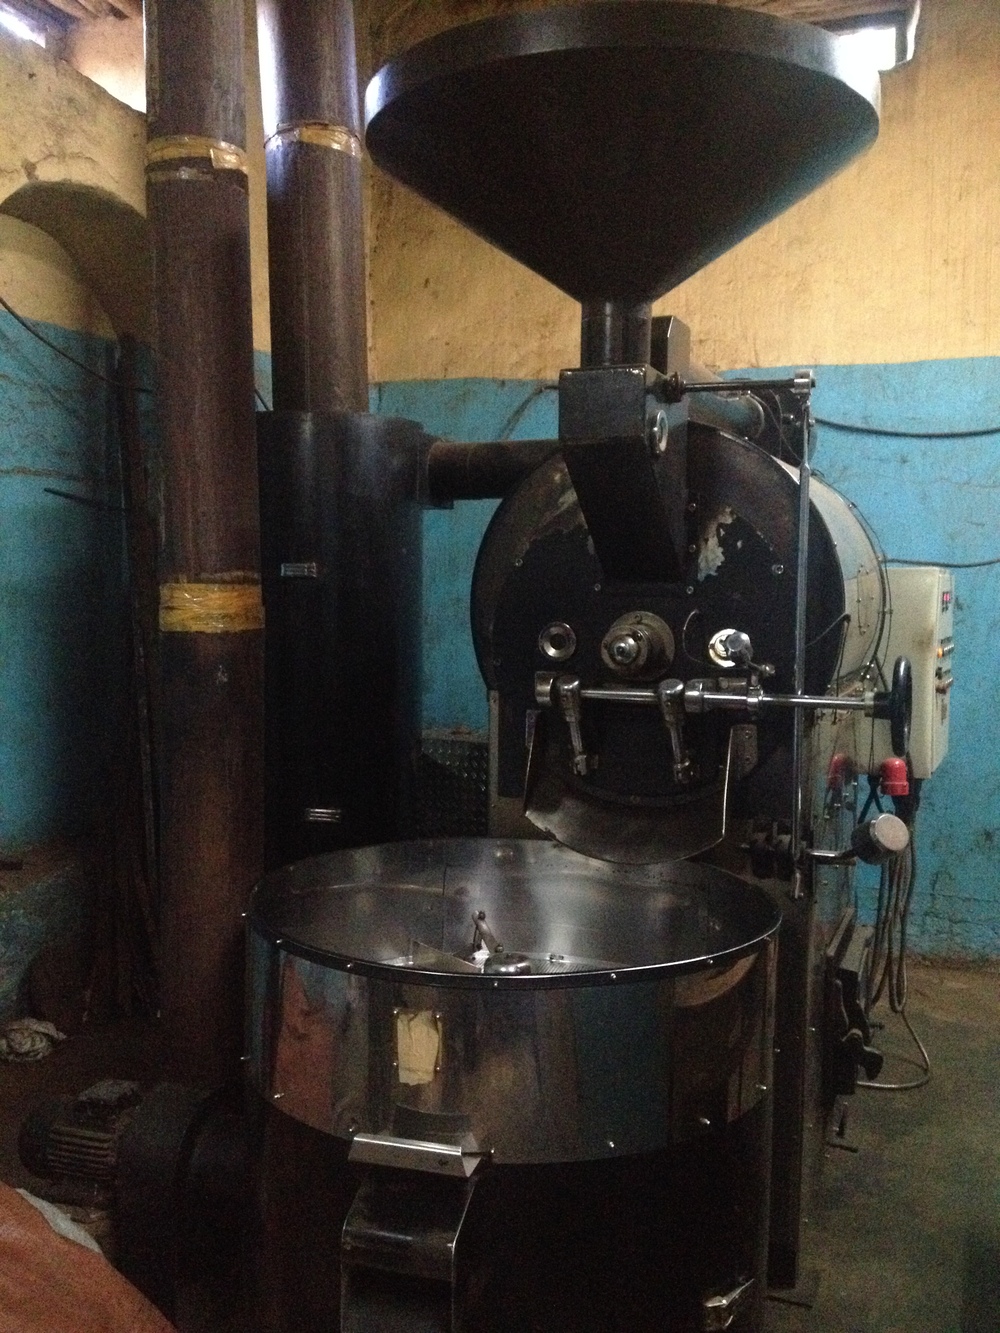 The Harar Coffee Company